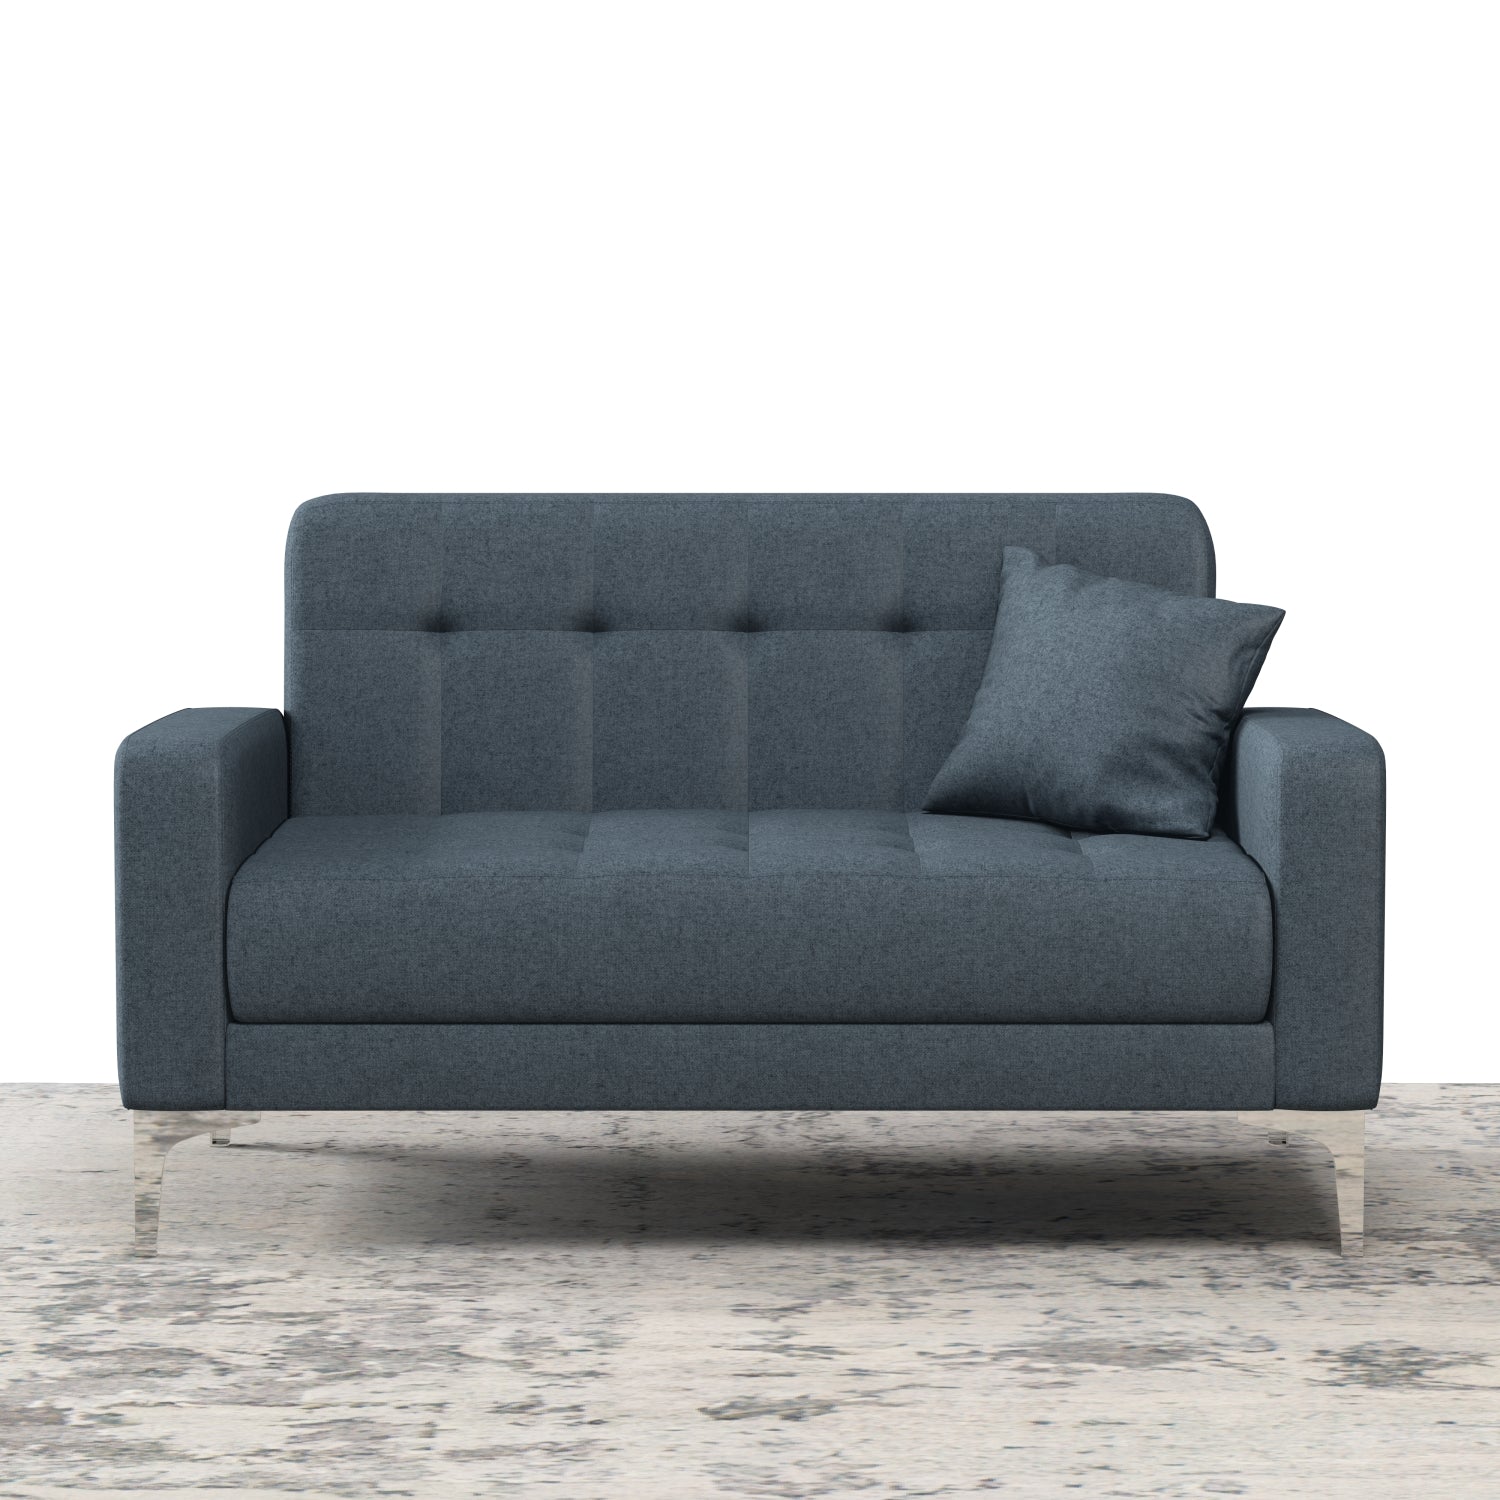 ViscoLogic Bella Forward Fashion Mid-Century Tufted Style Fabric Upholstered Modern Living Room Sofa (Grey)